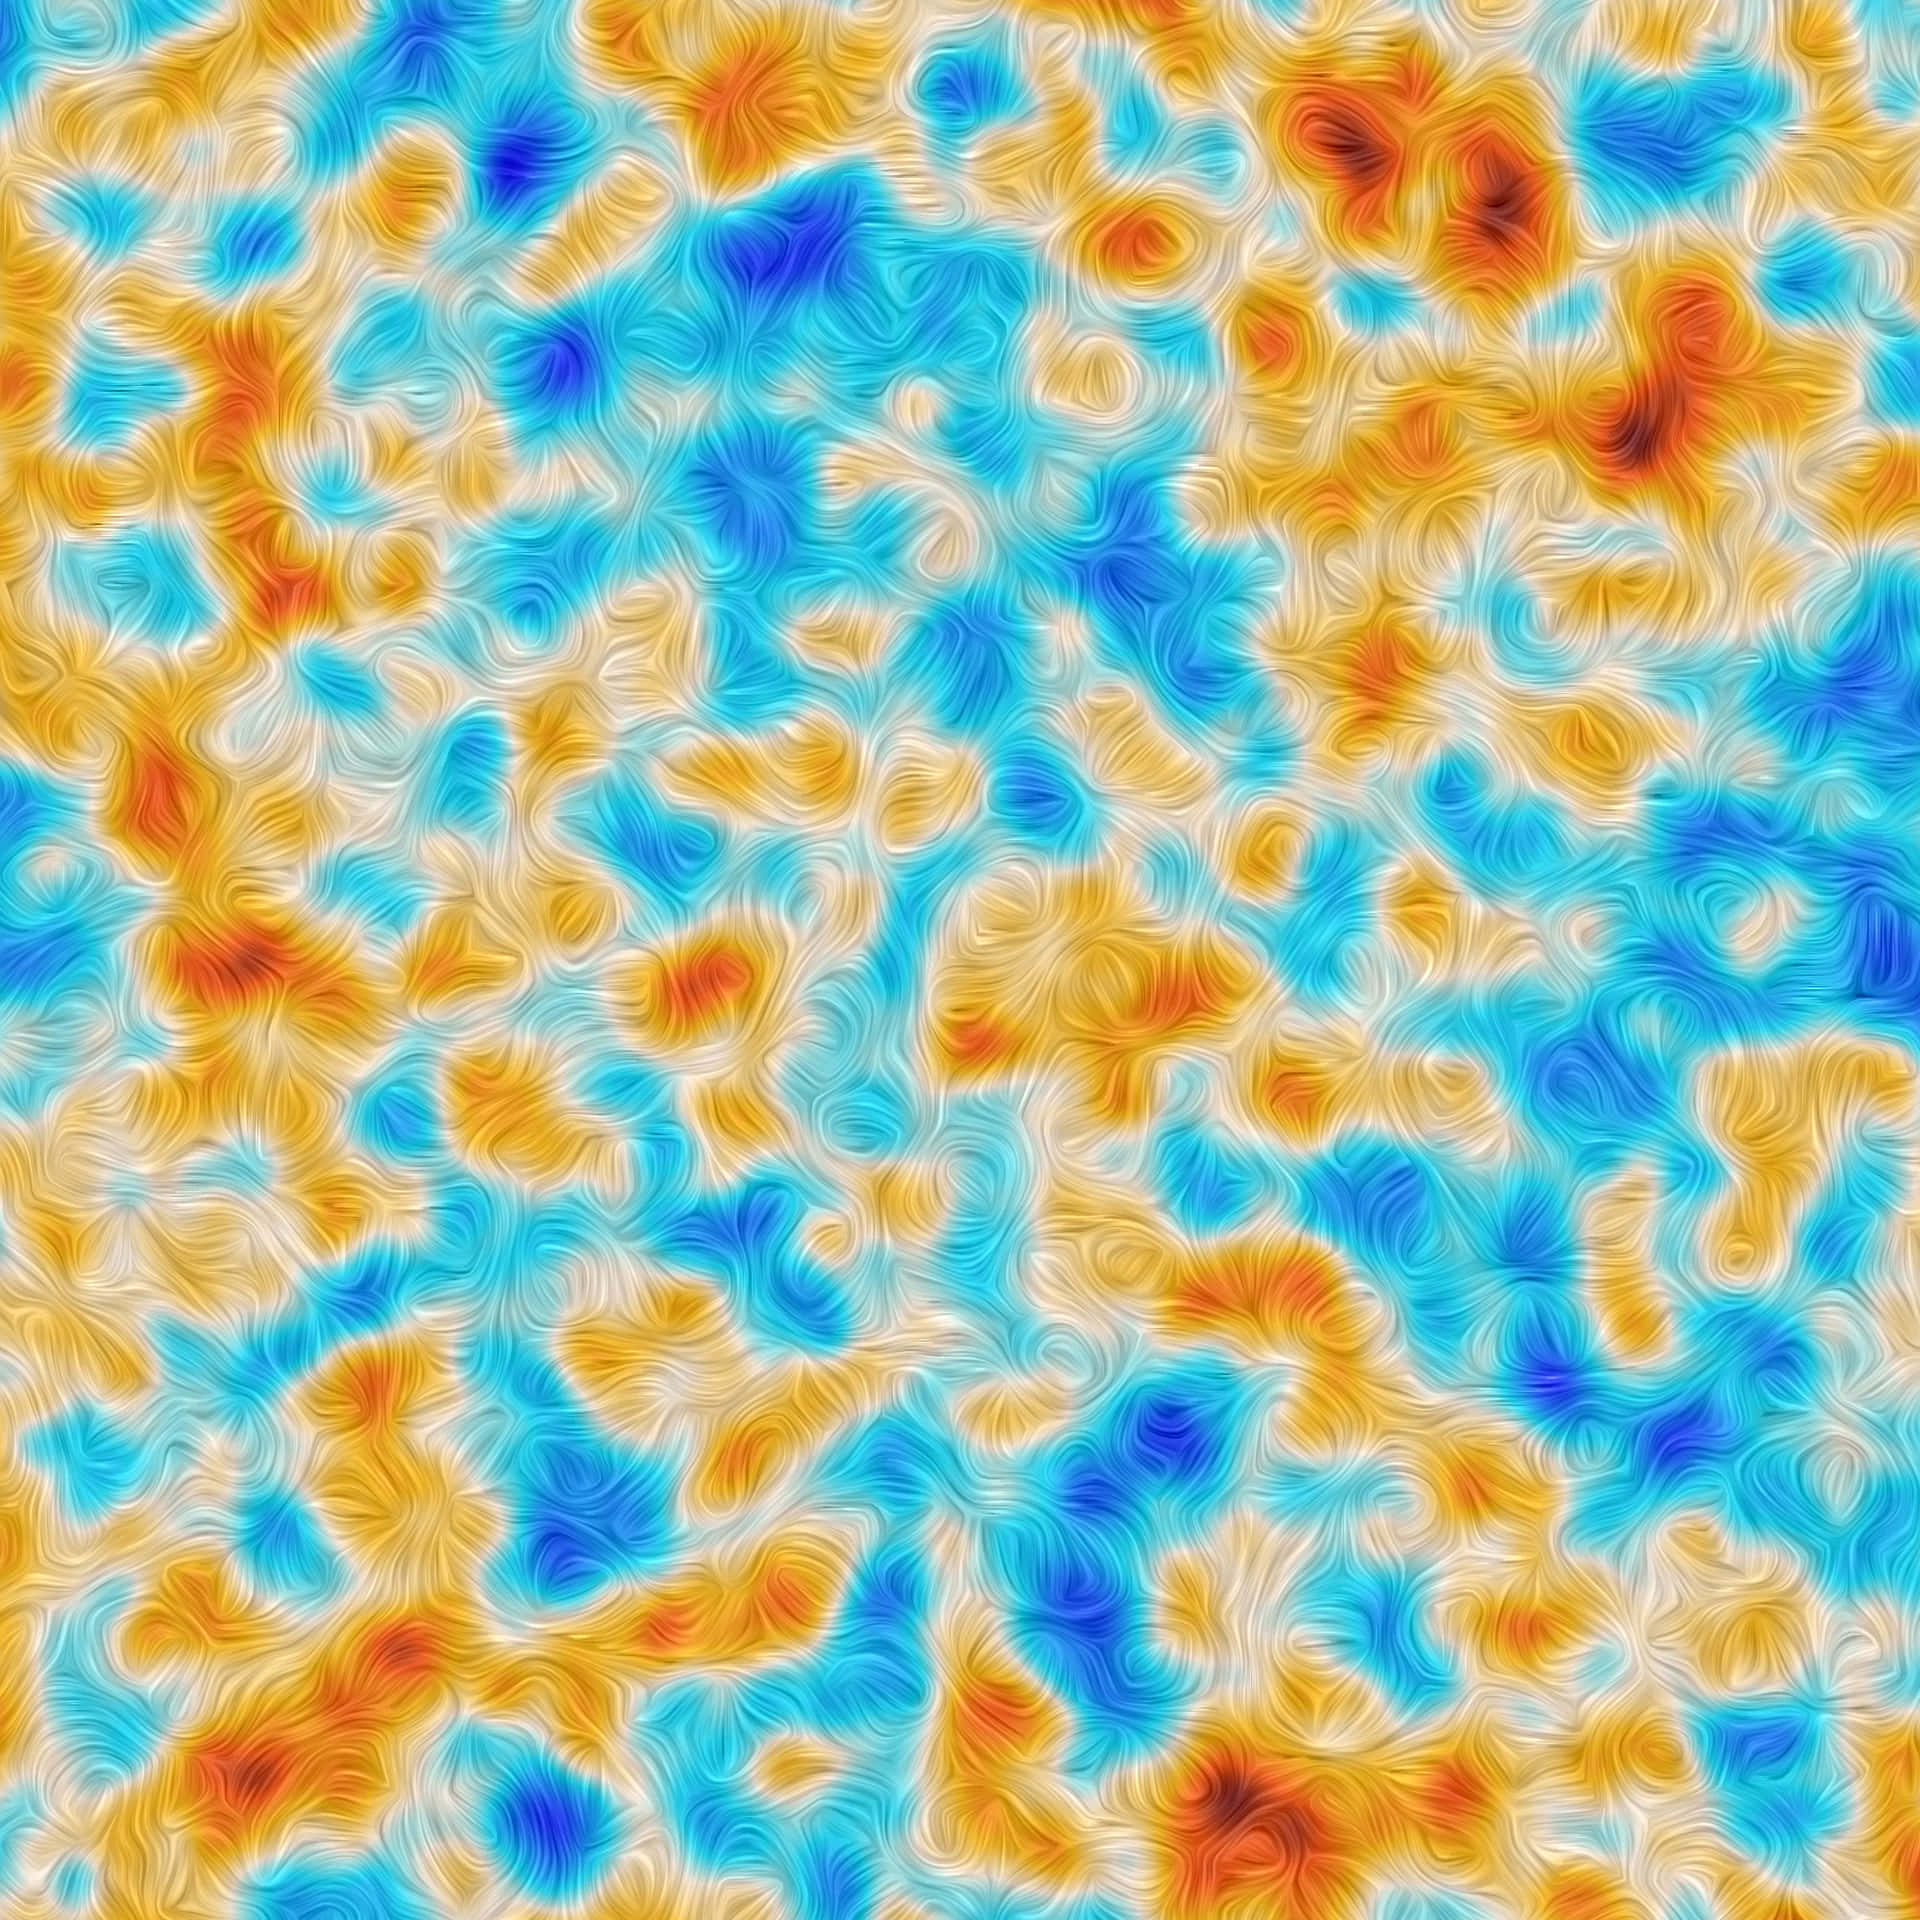 Radiation Swirls Cosmic Microwave Background